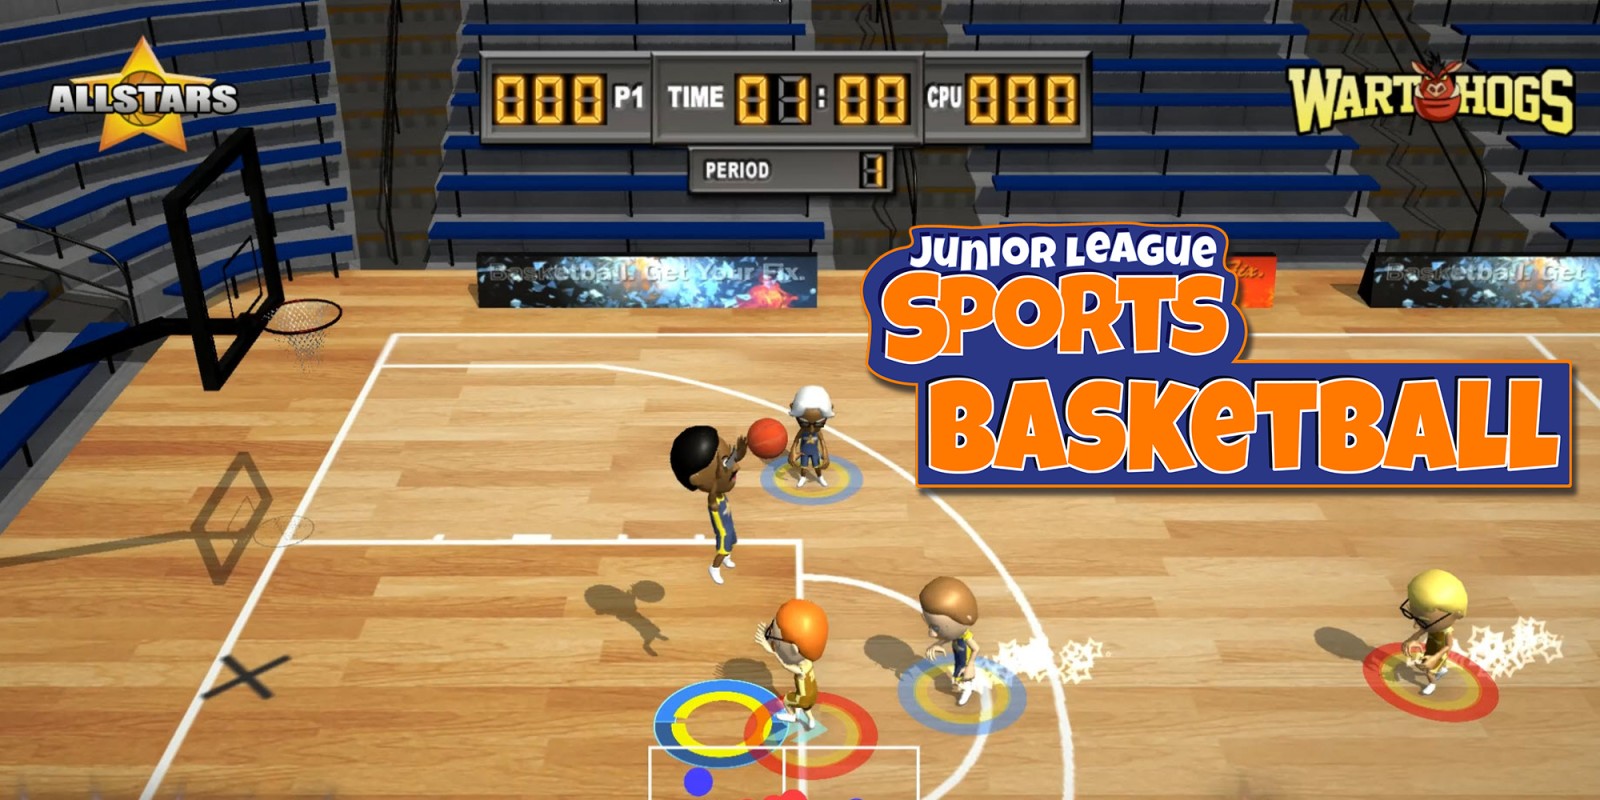 Junior League Sports - Basketball